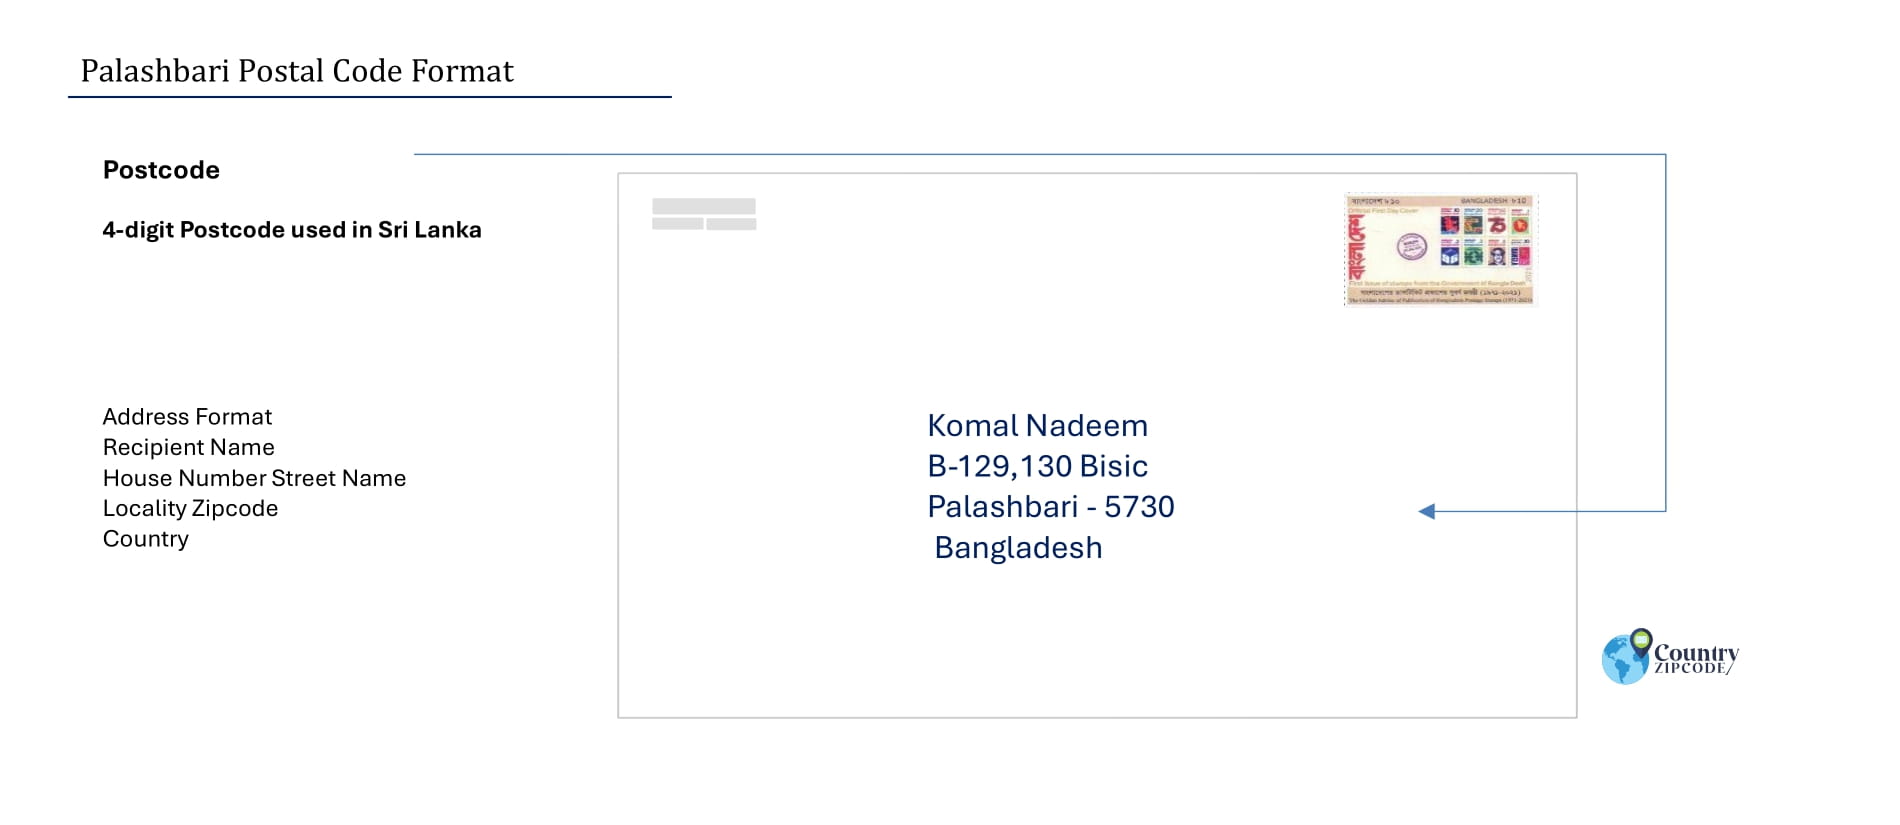 Palashbari Postal code format